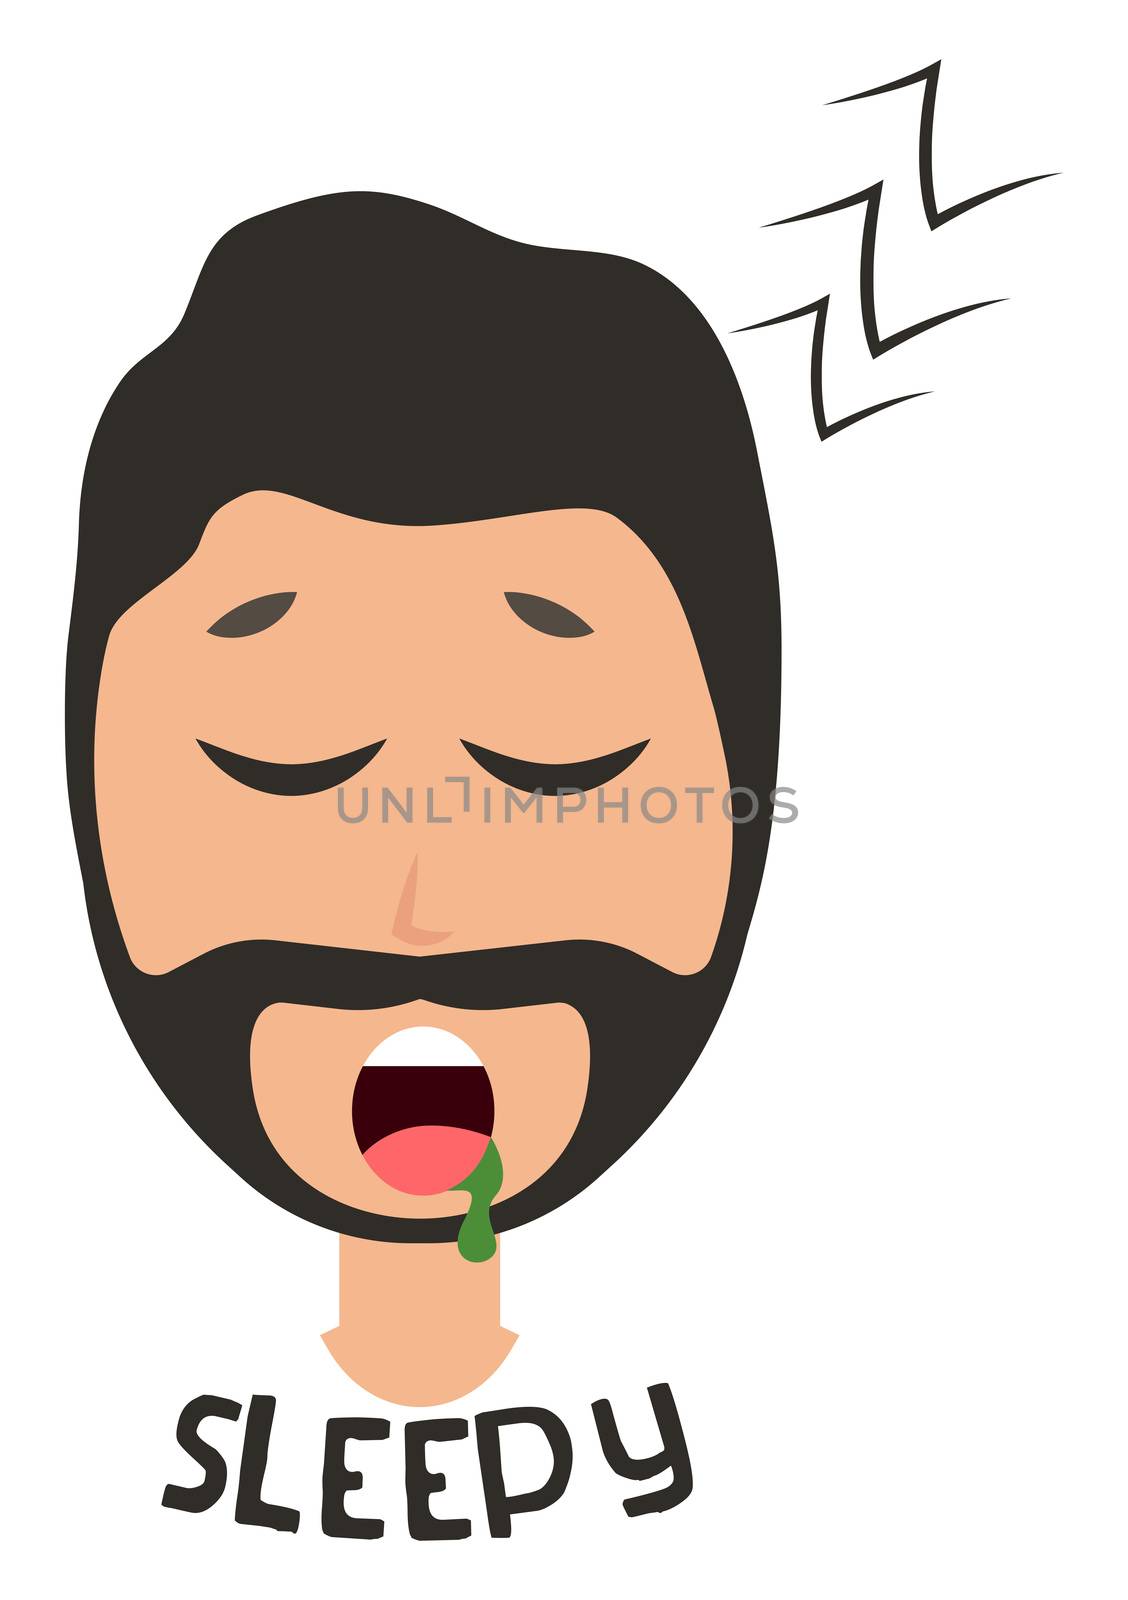 Sleepy man emoji, illustration, vector on white background